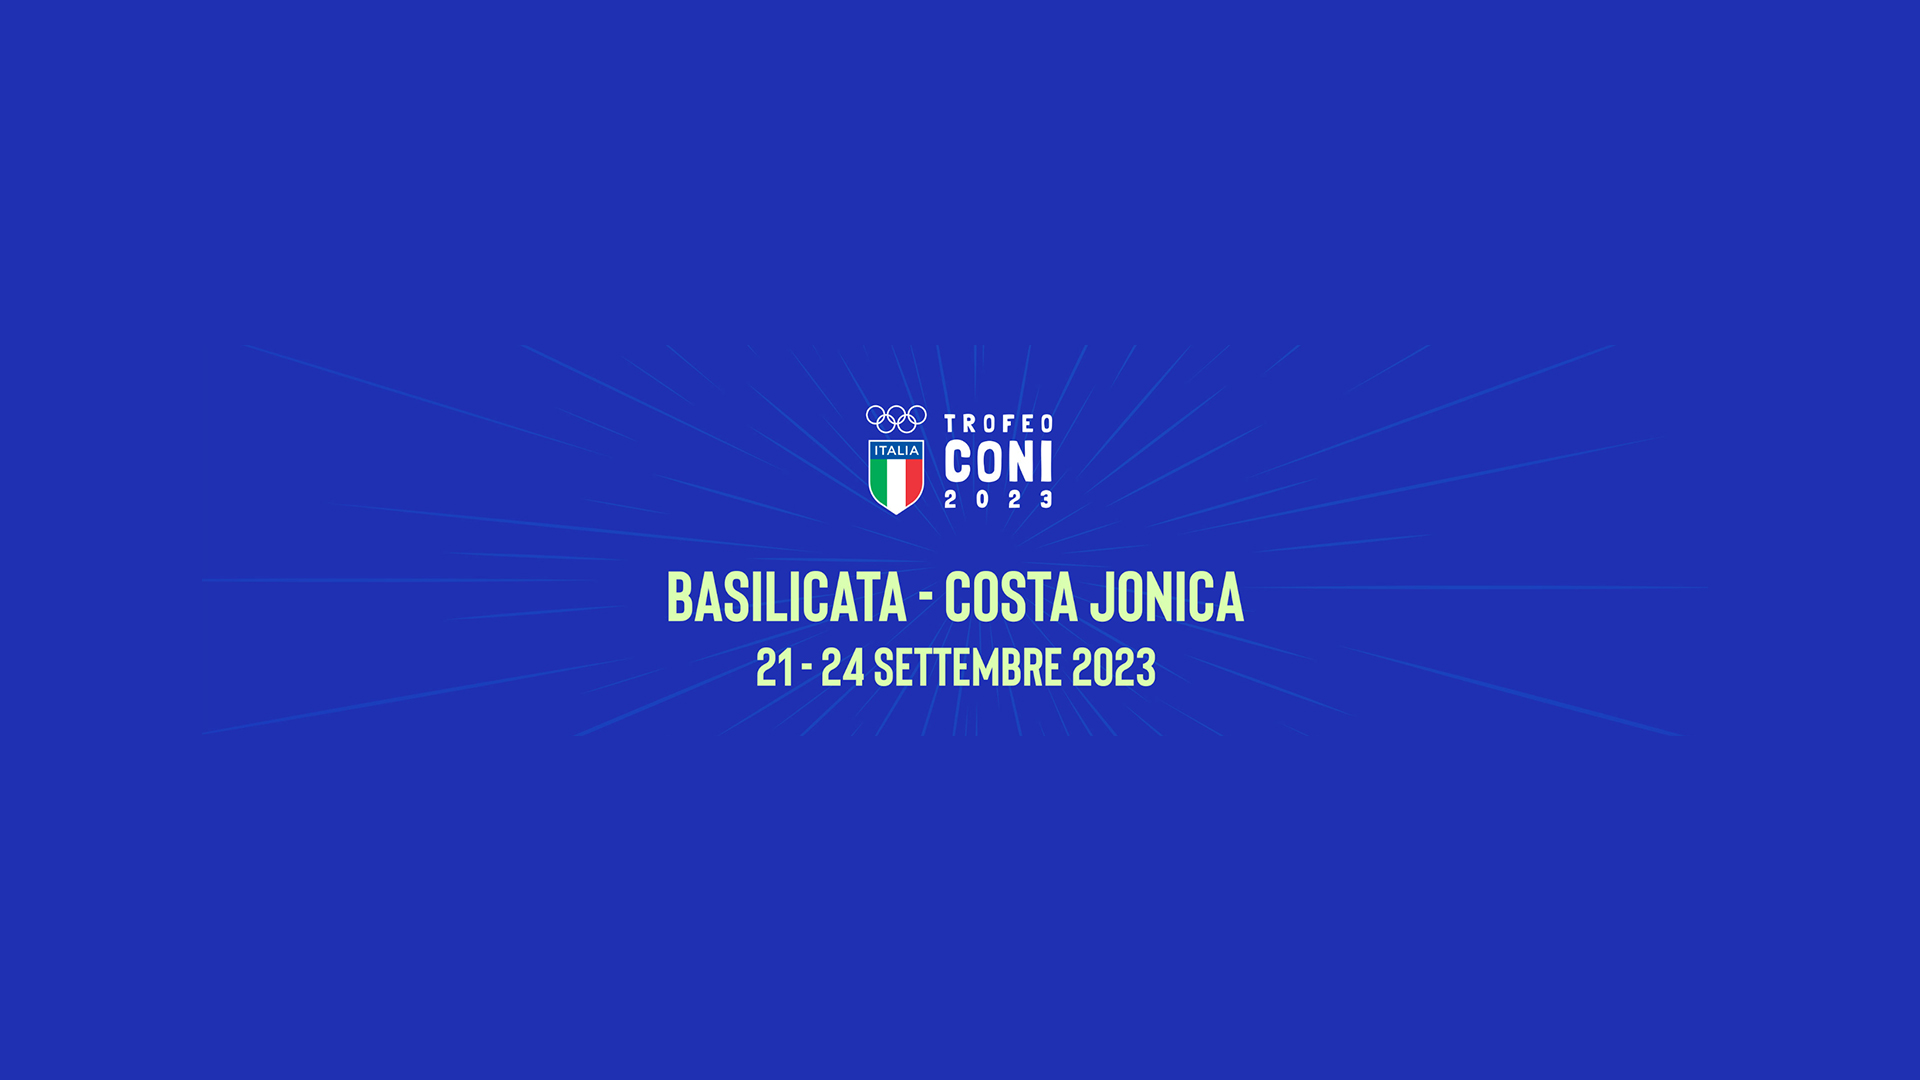 images/2023/trofeo-coni-2023-basilicata-2.jpg#joomlaImage://local-images/2023/trofeo-coni-2023-basilicata-2.jpg?width=1920&height=1080